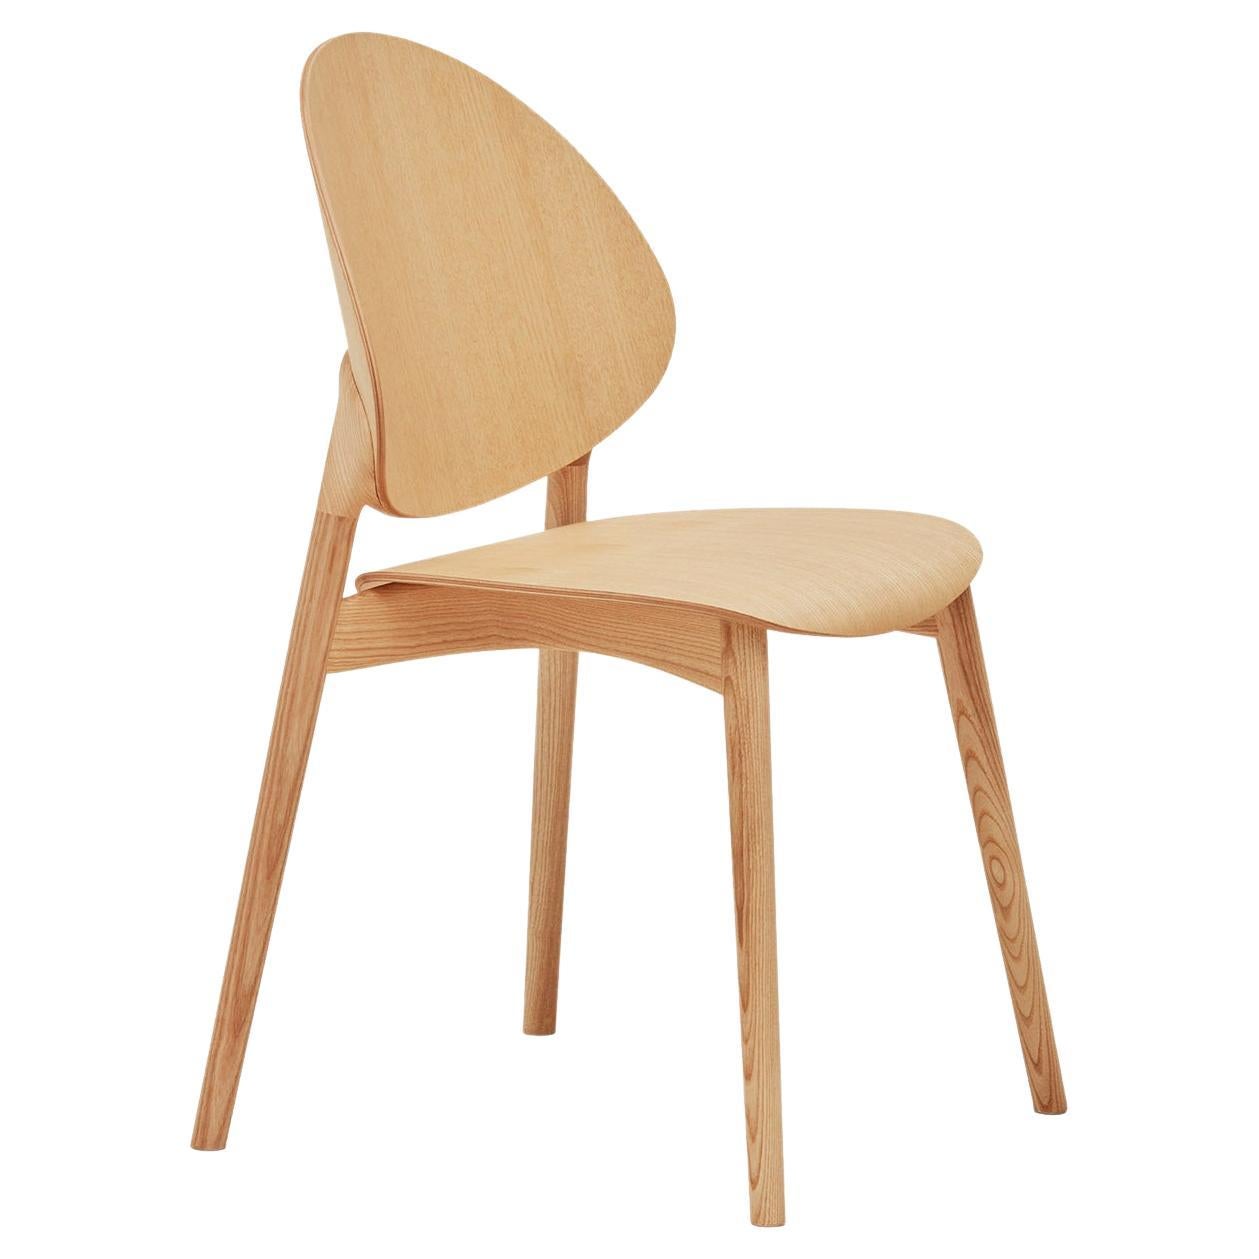 Fleuron 200 Chair by Constance Guisset